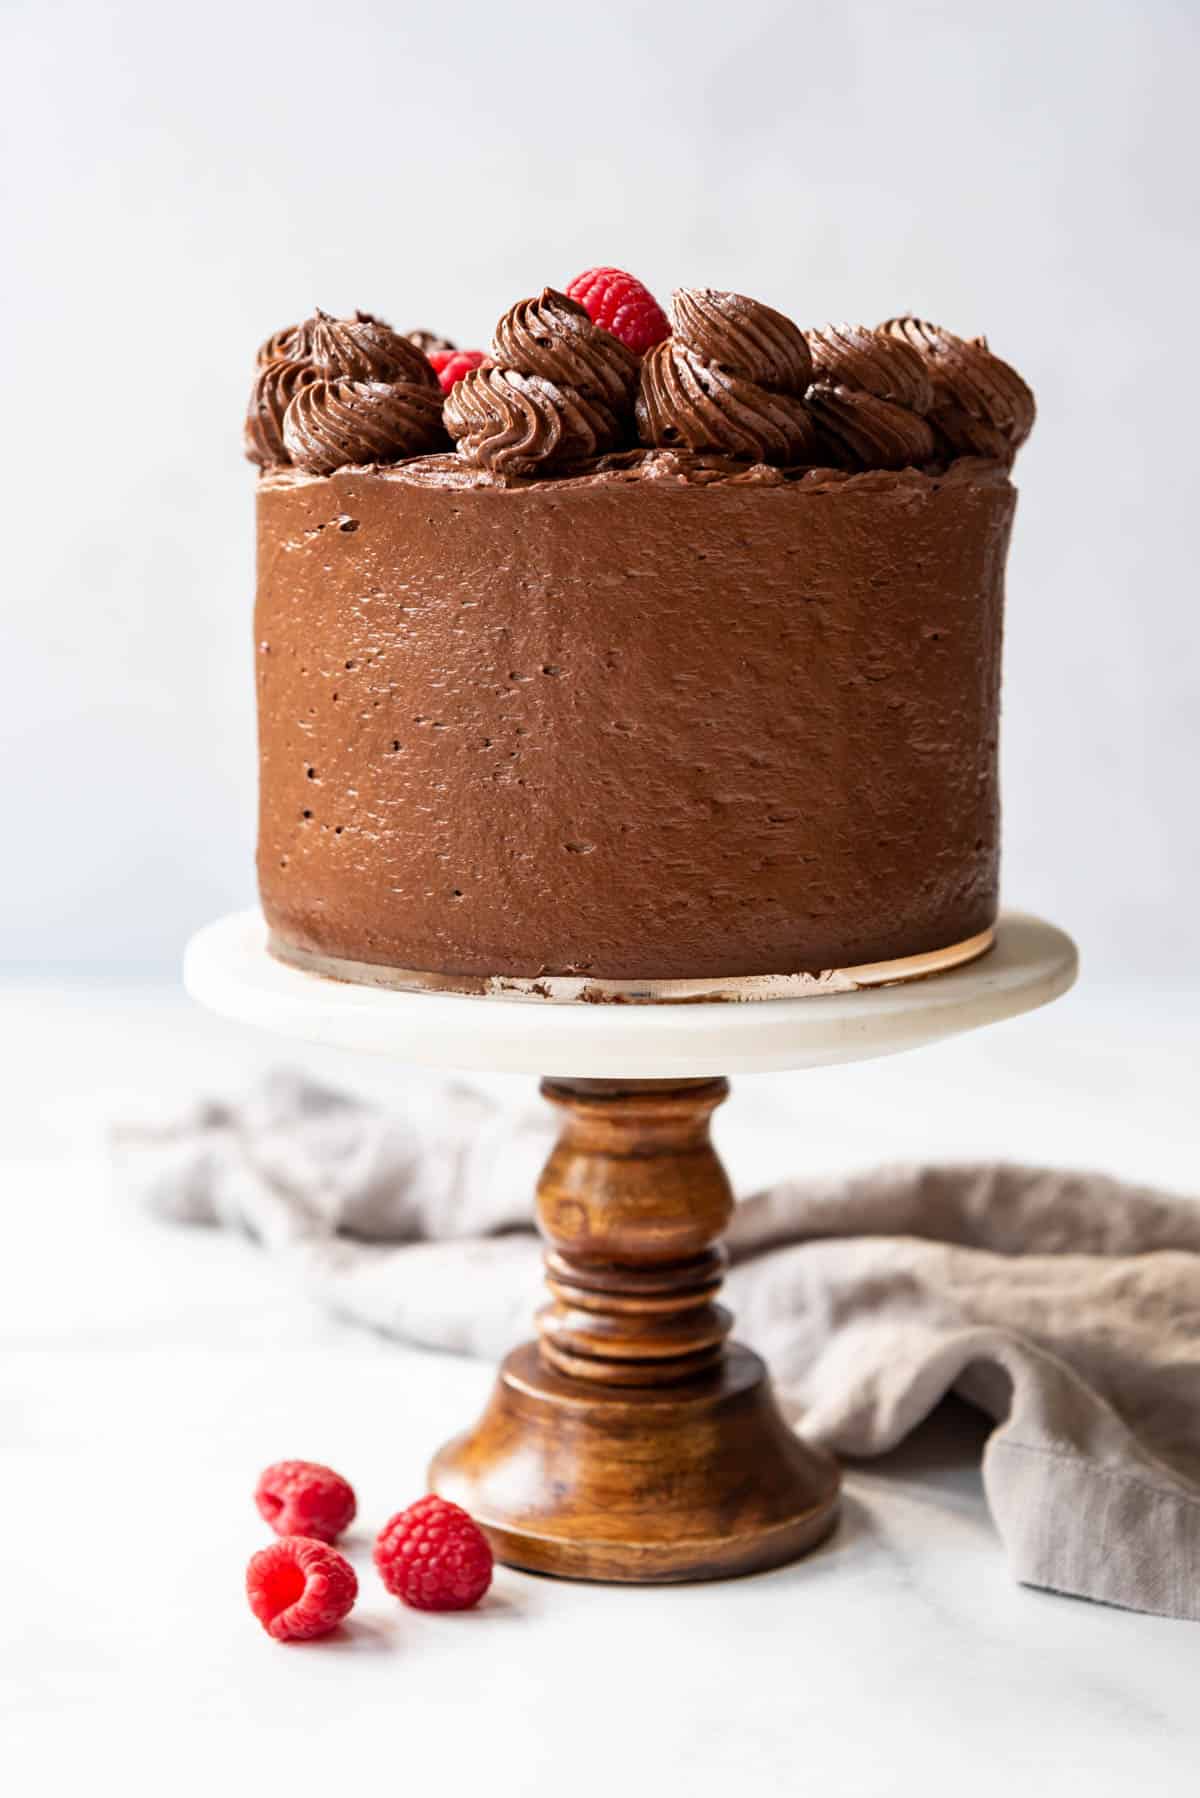 A finished raspberry chocolate cake on a cake stand.